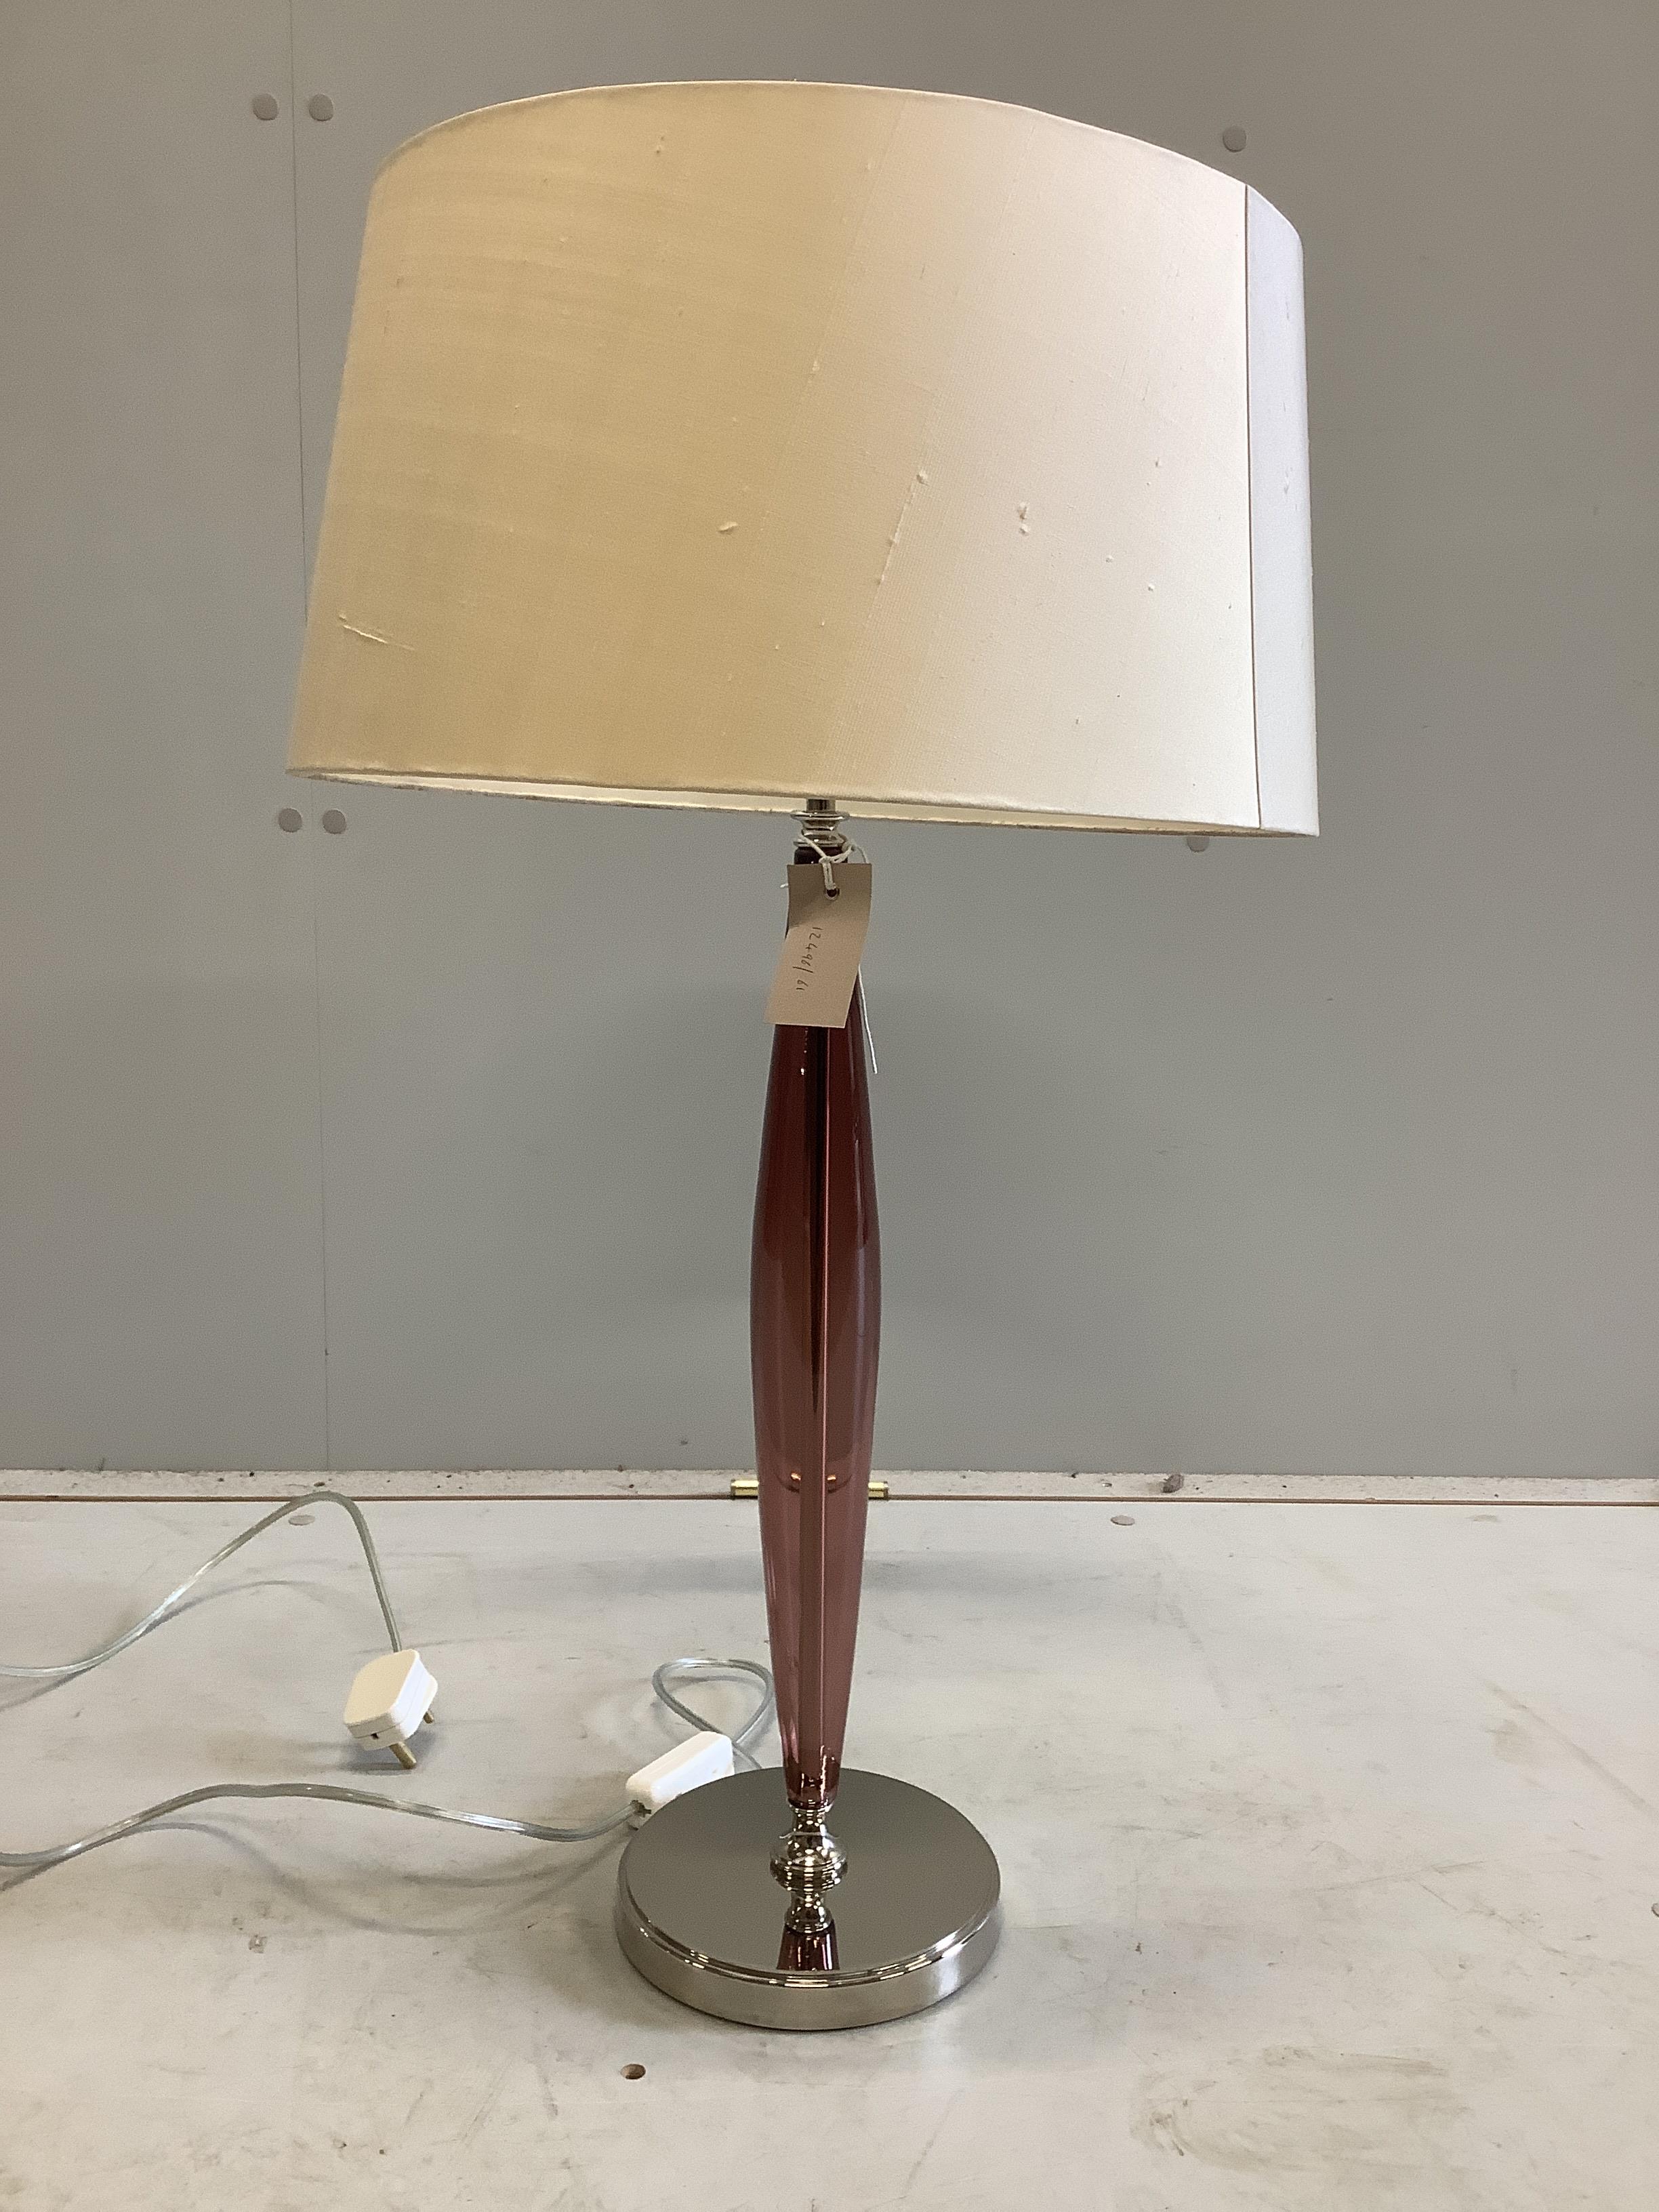 A Verona table lamp, height including shade 70cm